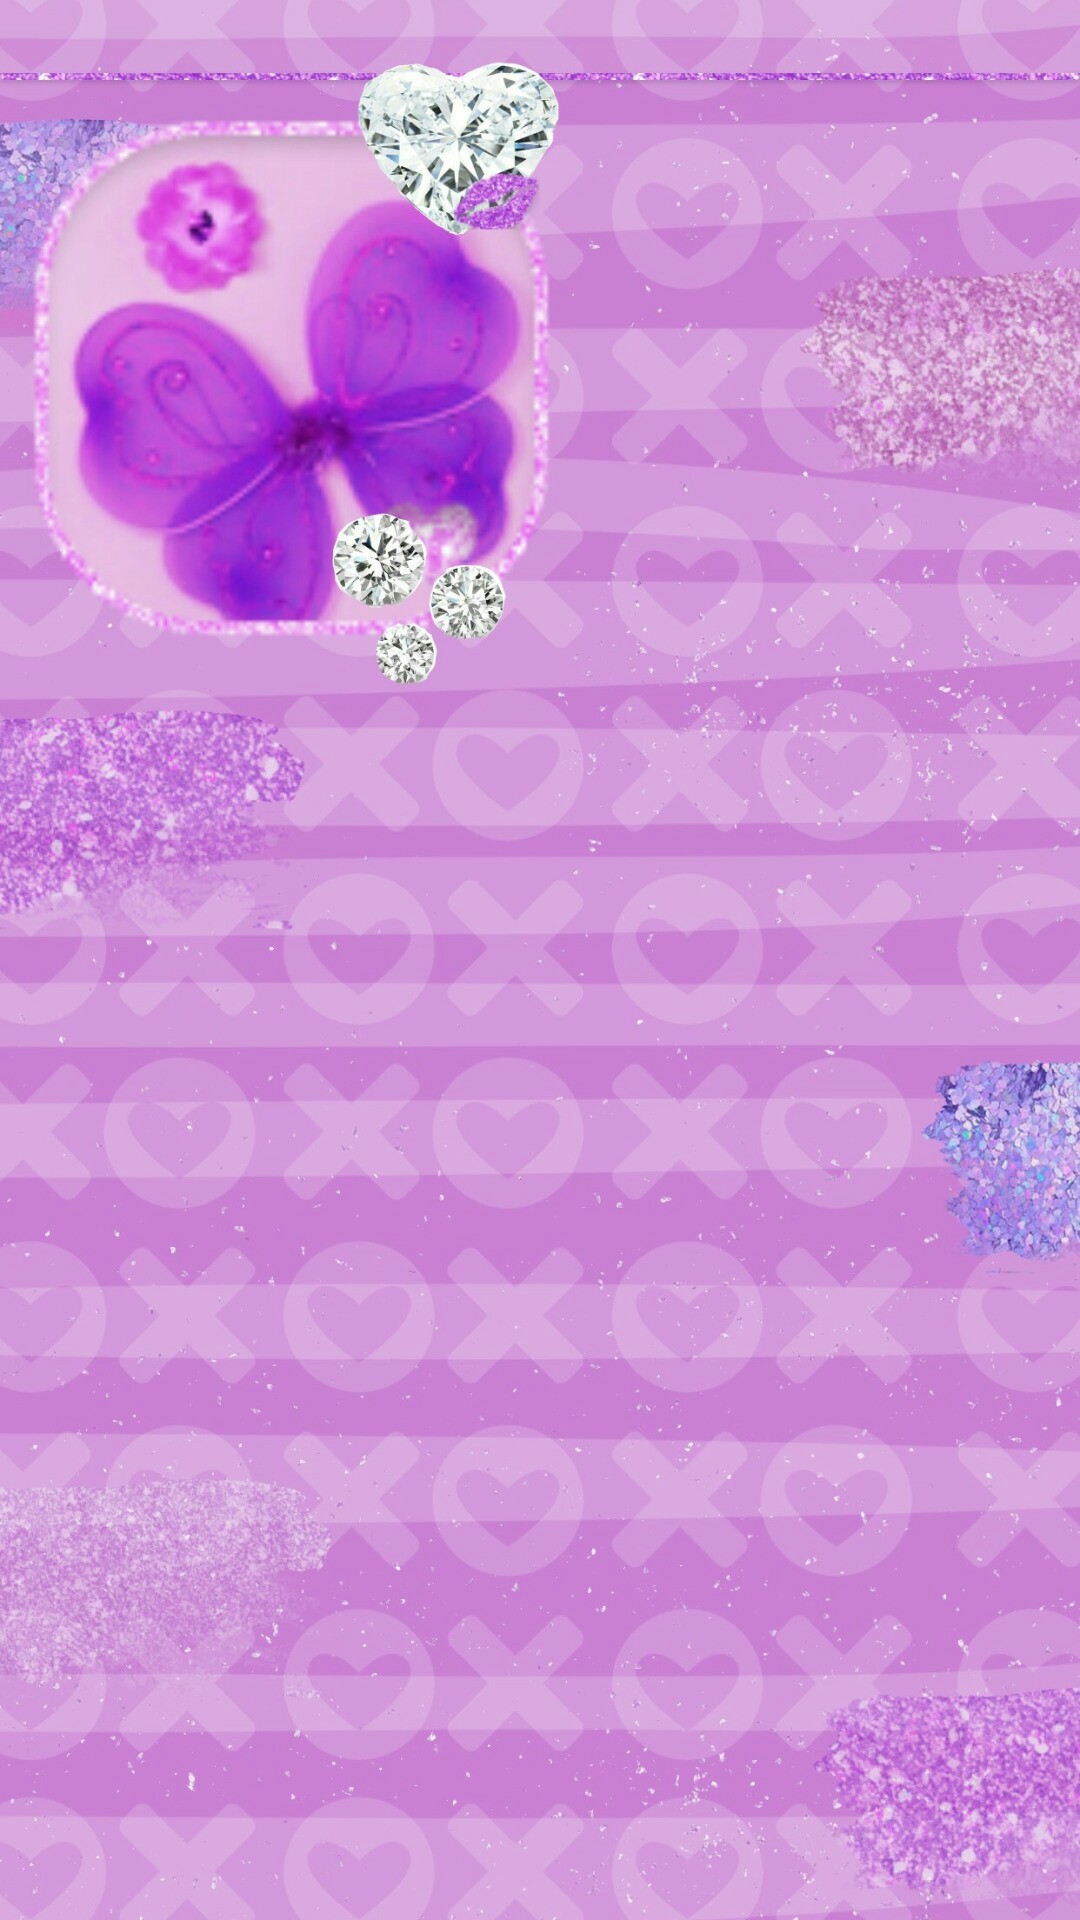 Glitter Wallpaper, Wallpaper Art, Purple Walls, Pretty Patterns, Phone  Wallpapers, Stationery, Kawaii, Kiss, Butterfly